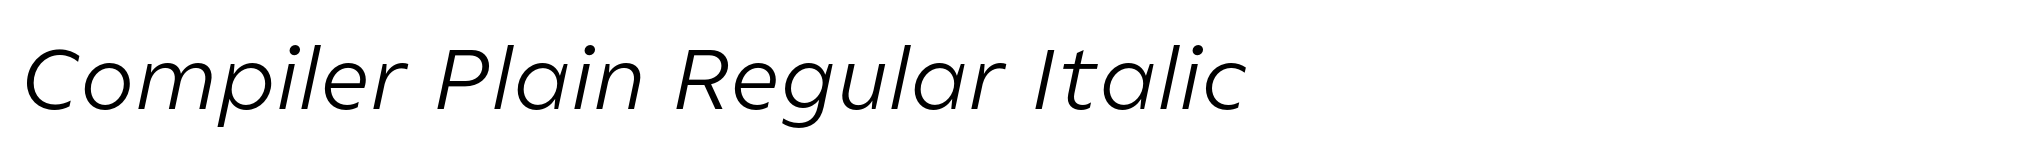 Compiler Plain Regular Italic image